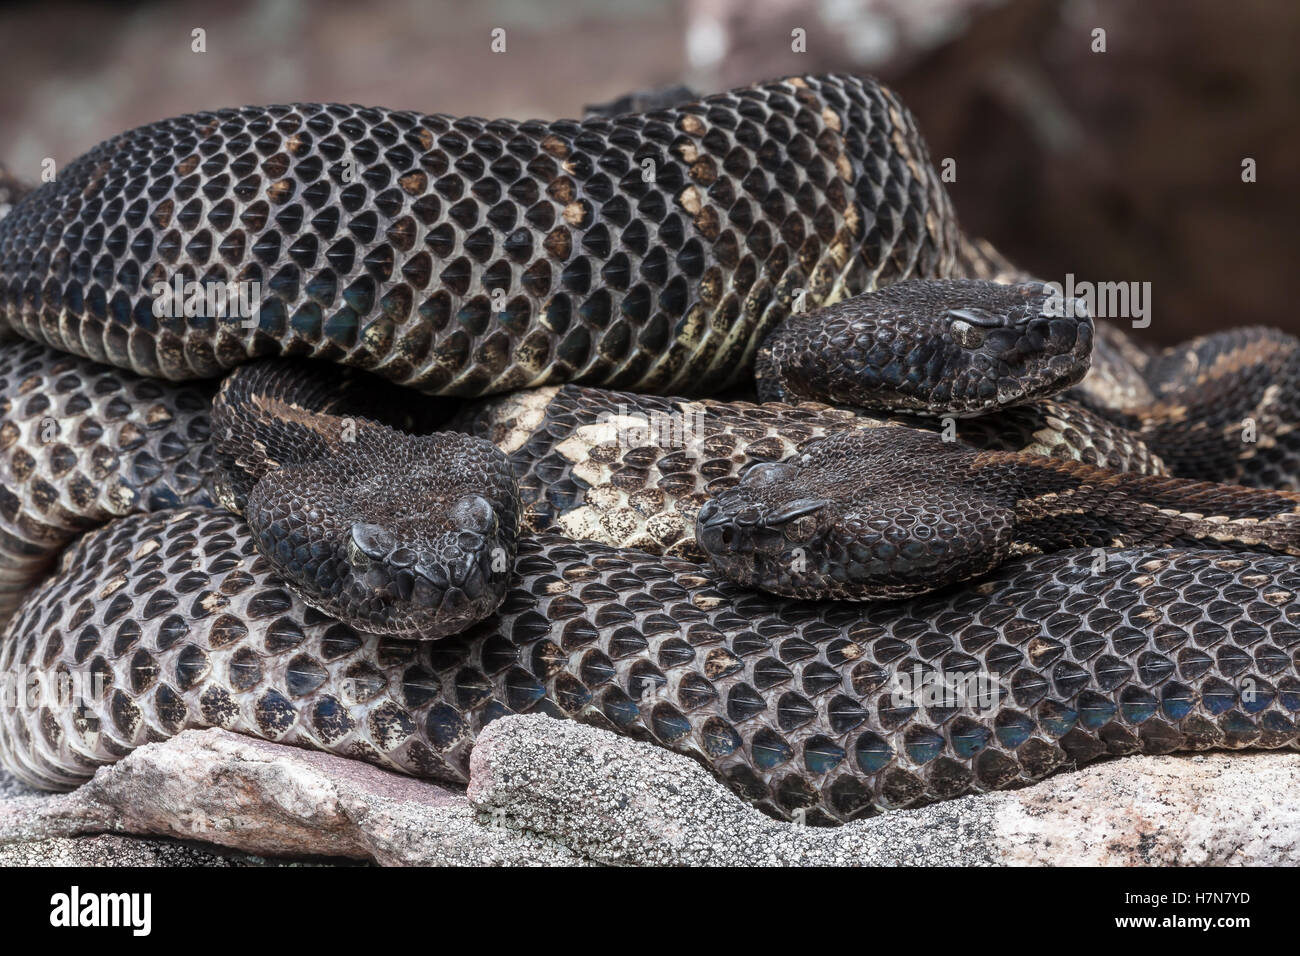 3 gravid dark phase Timber Rattlesnakes basking at rookery area in rock field near den. Stock Photo